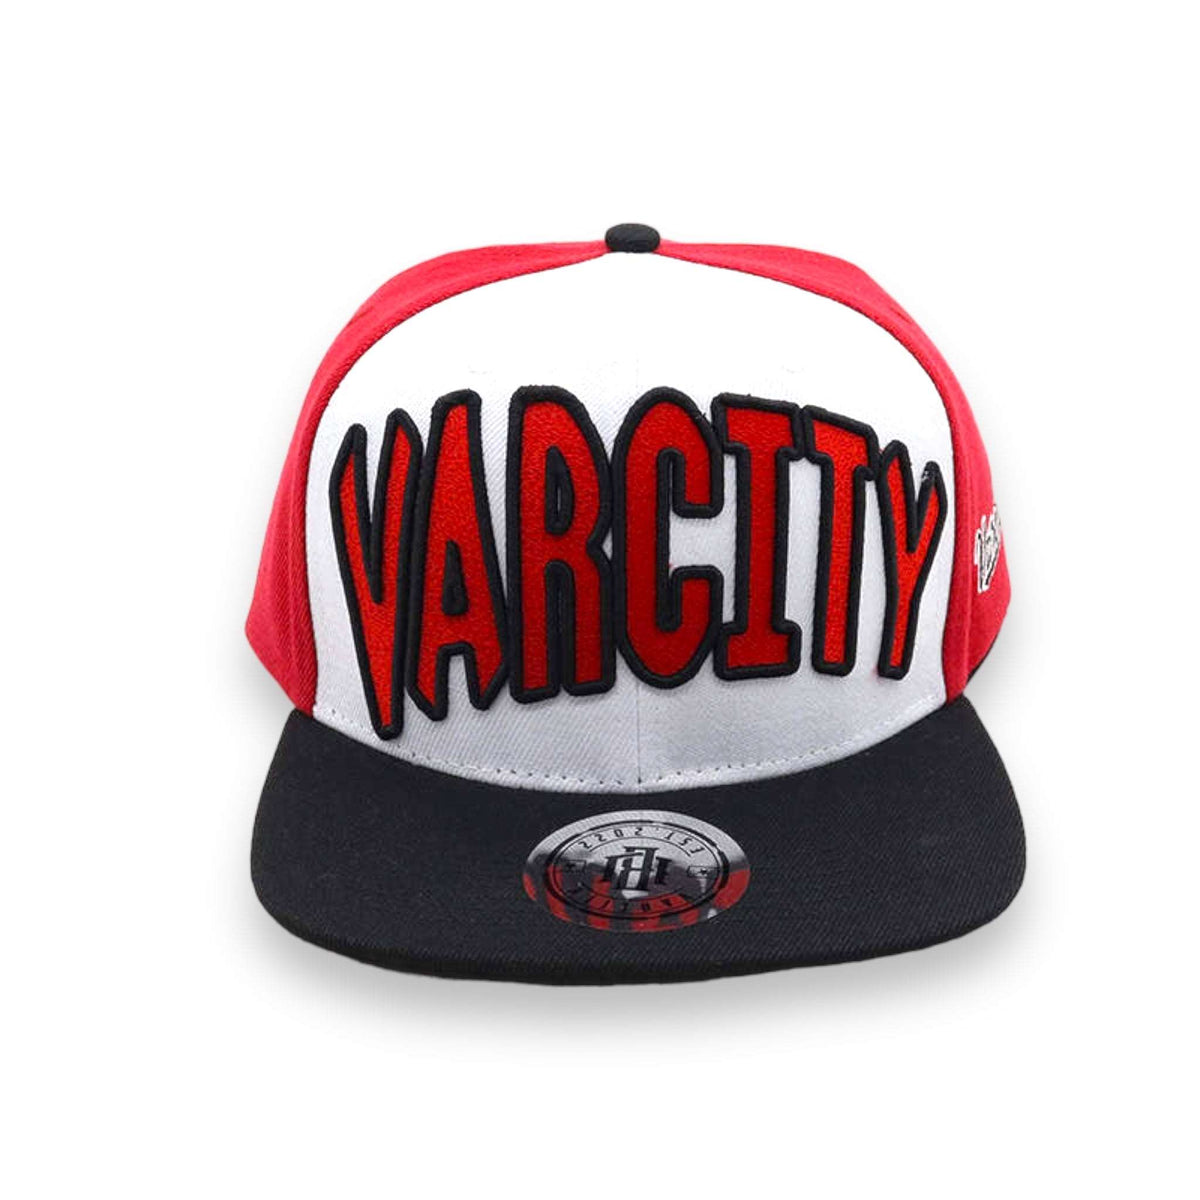 Varcity Signature Series Snapback Red